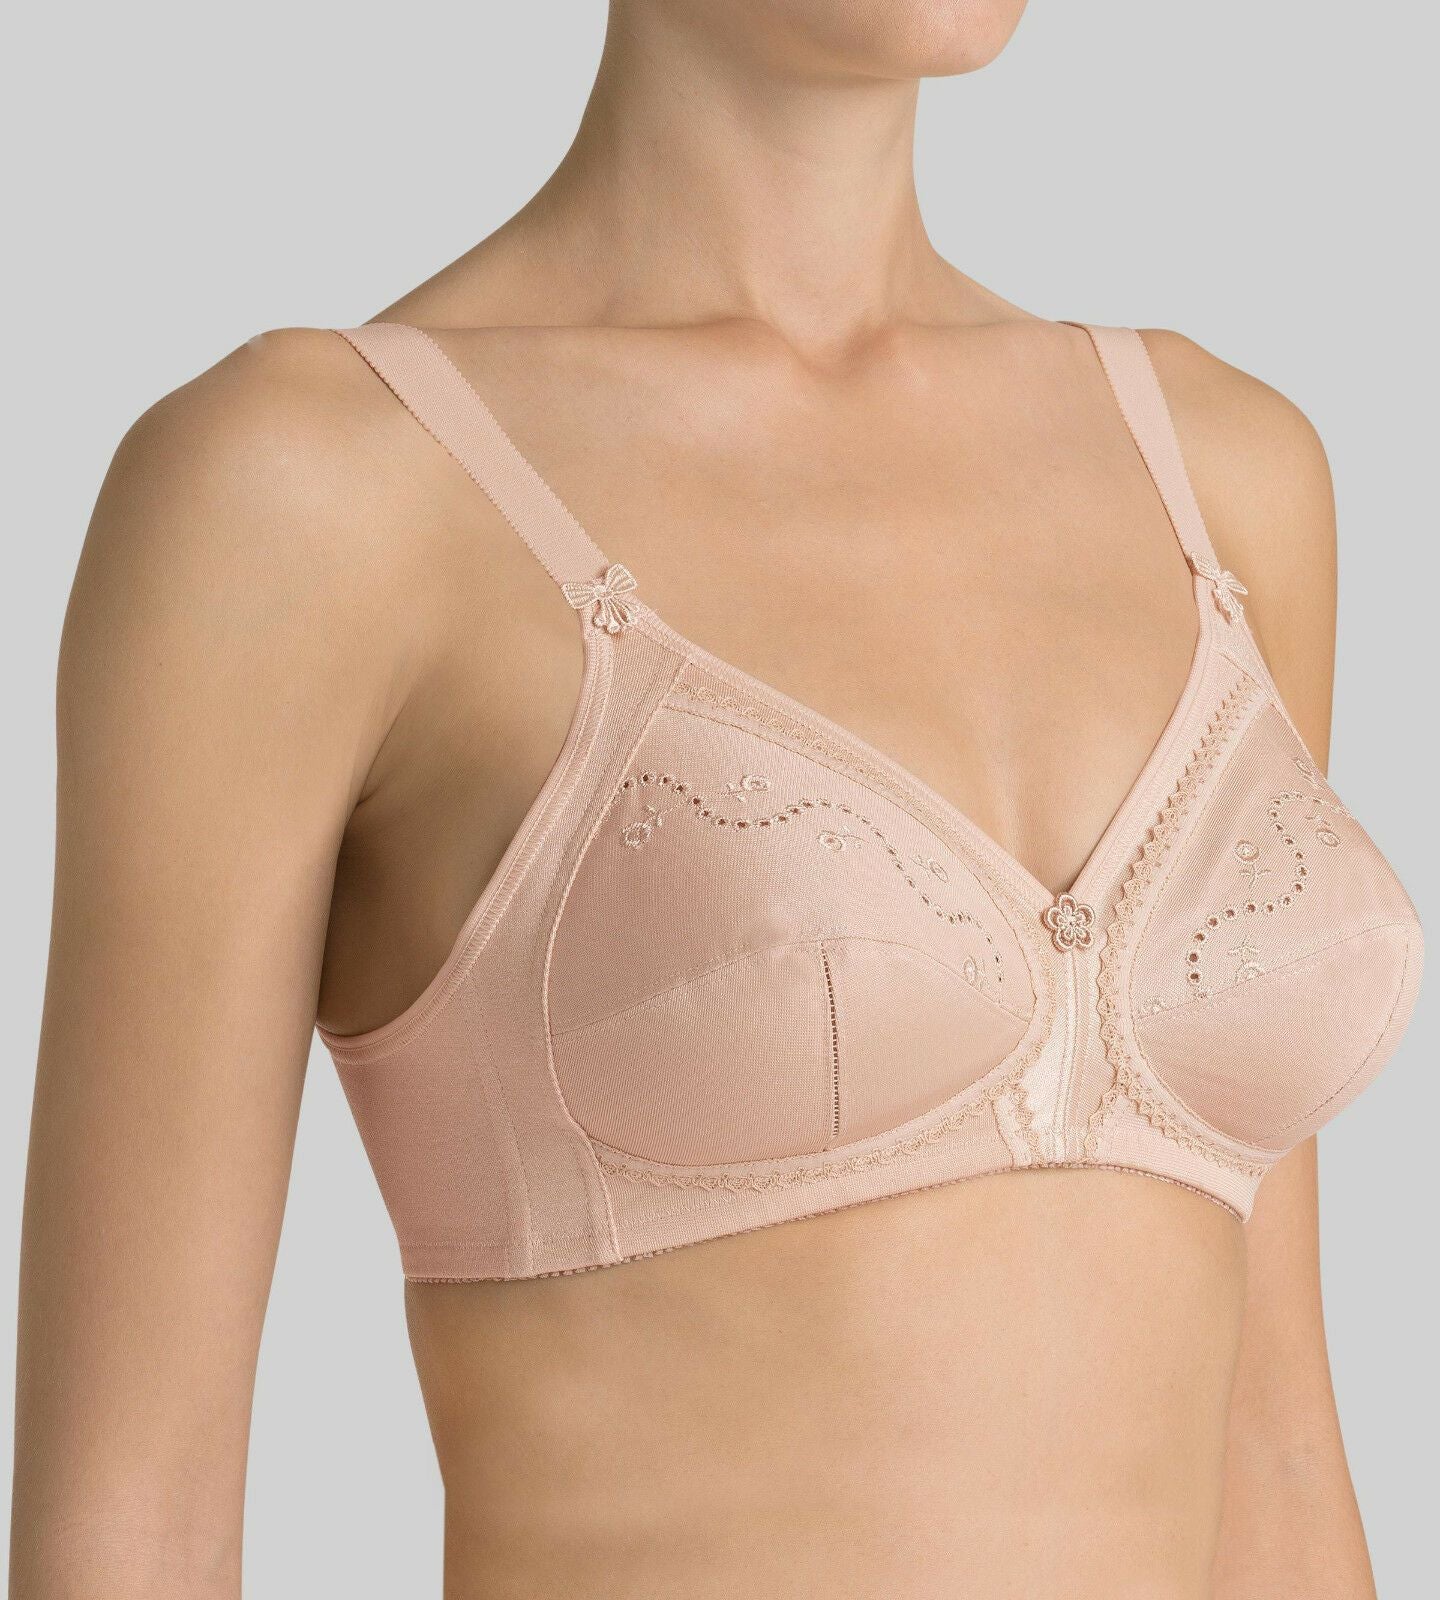 GFG Comfort 16 cotton bra Breathable Wireless Non Padded Bra